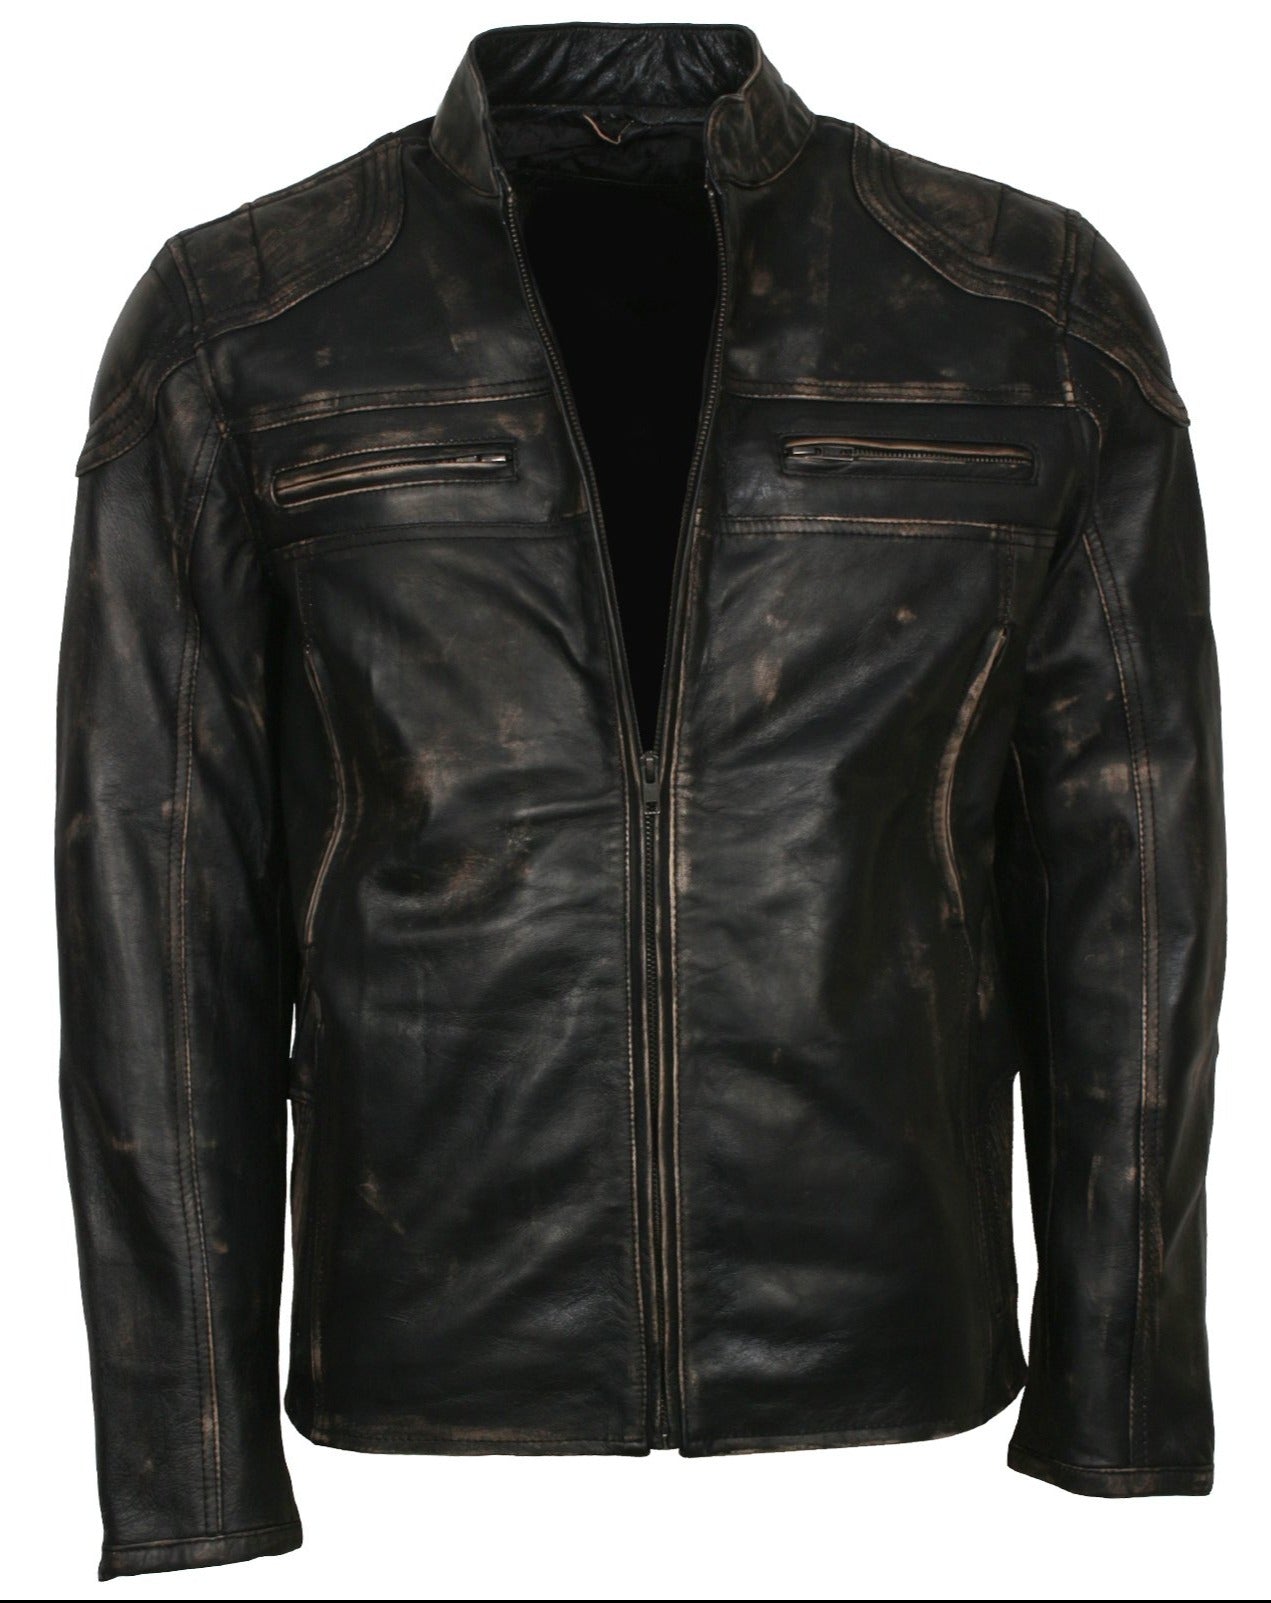 Distressed Black Leather Jacket Mens